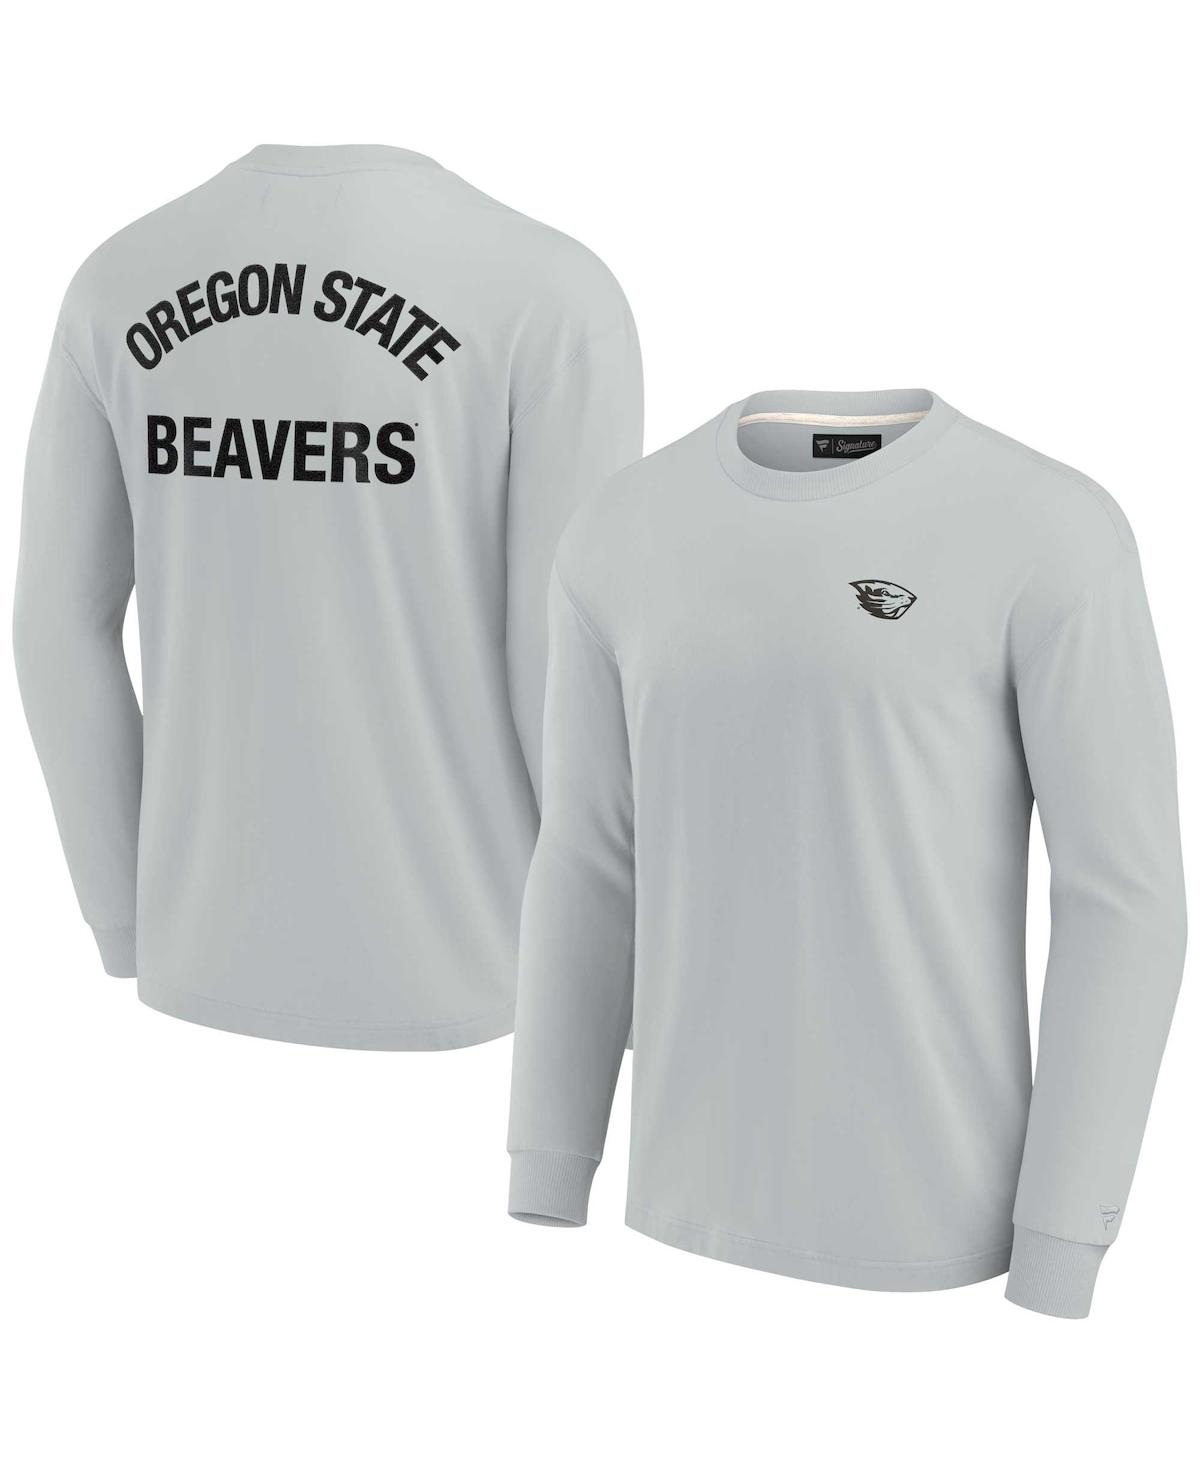 Men's and Women's Fanatics Signature Gray Oregon State Beavers Super Soft Long Sleeve T-shirt - Gray